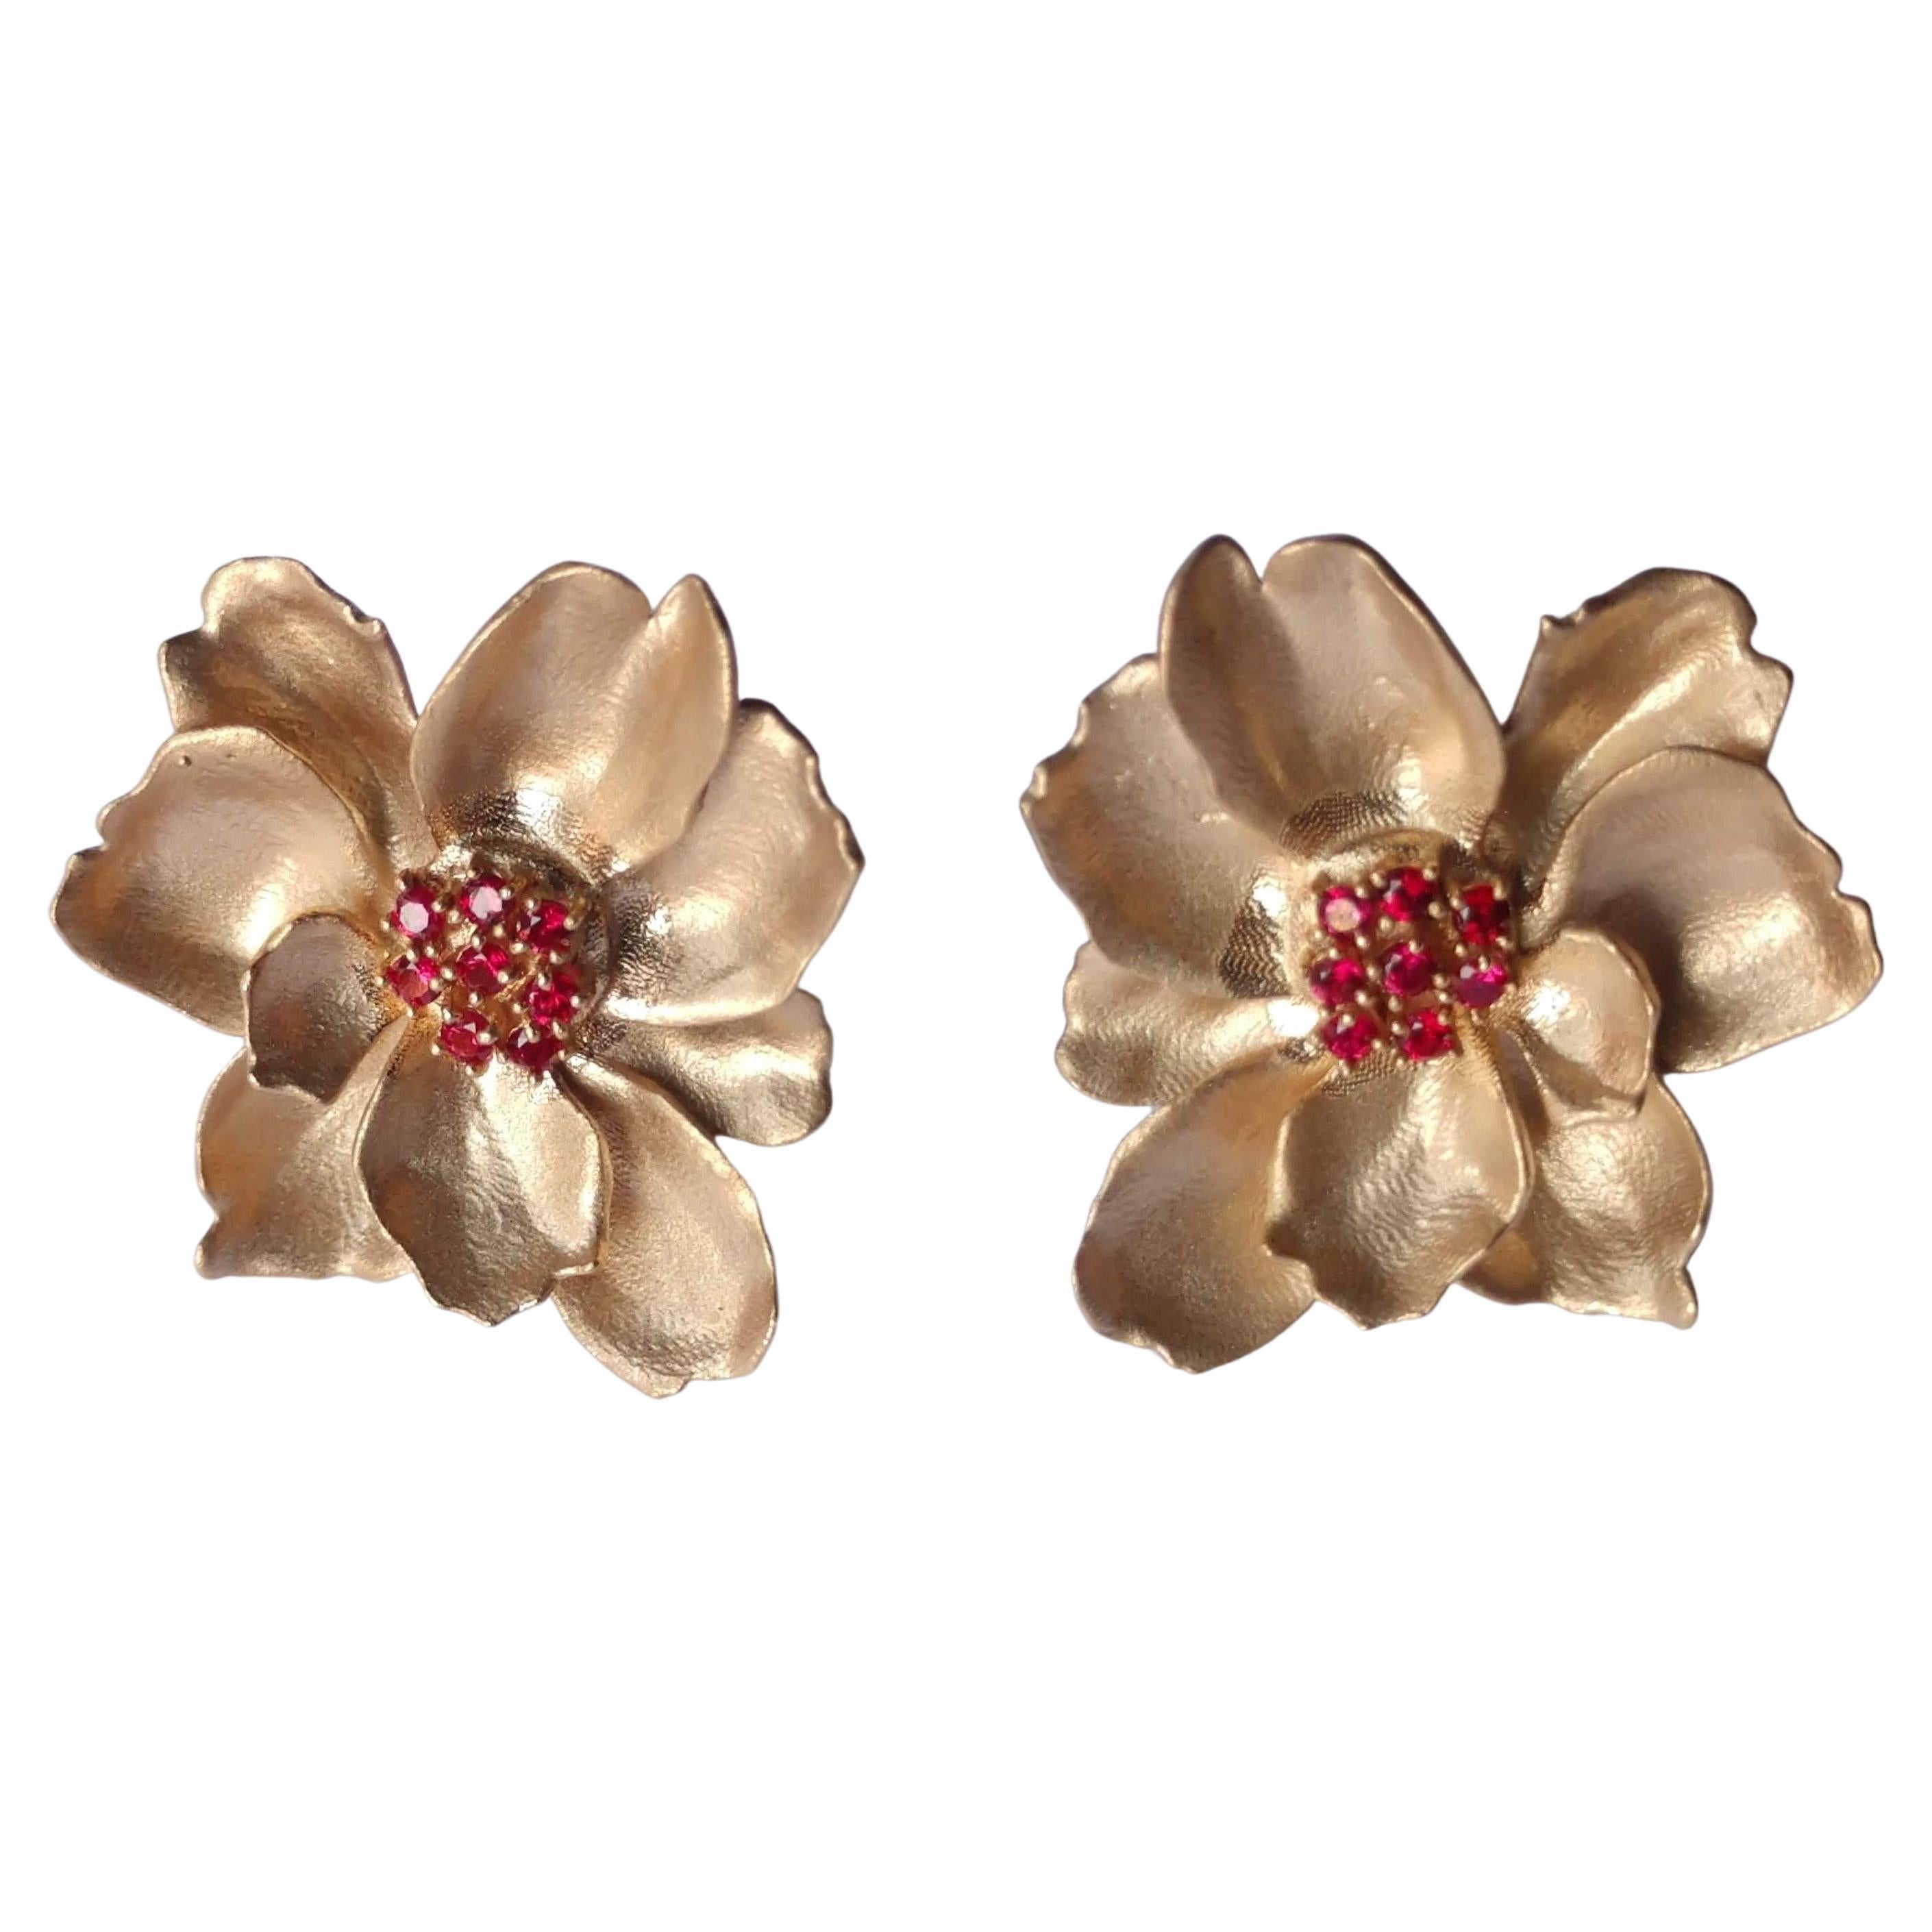 18 Karat Yellow Gold Wild Flower Earrings with Rubies